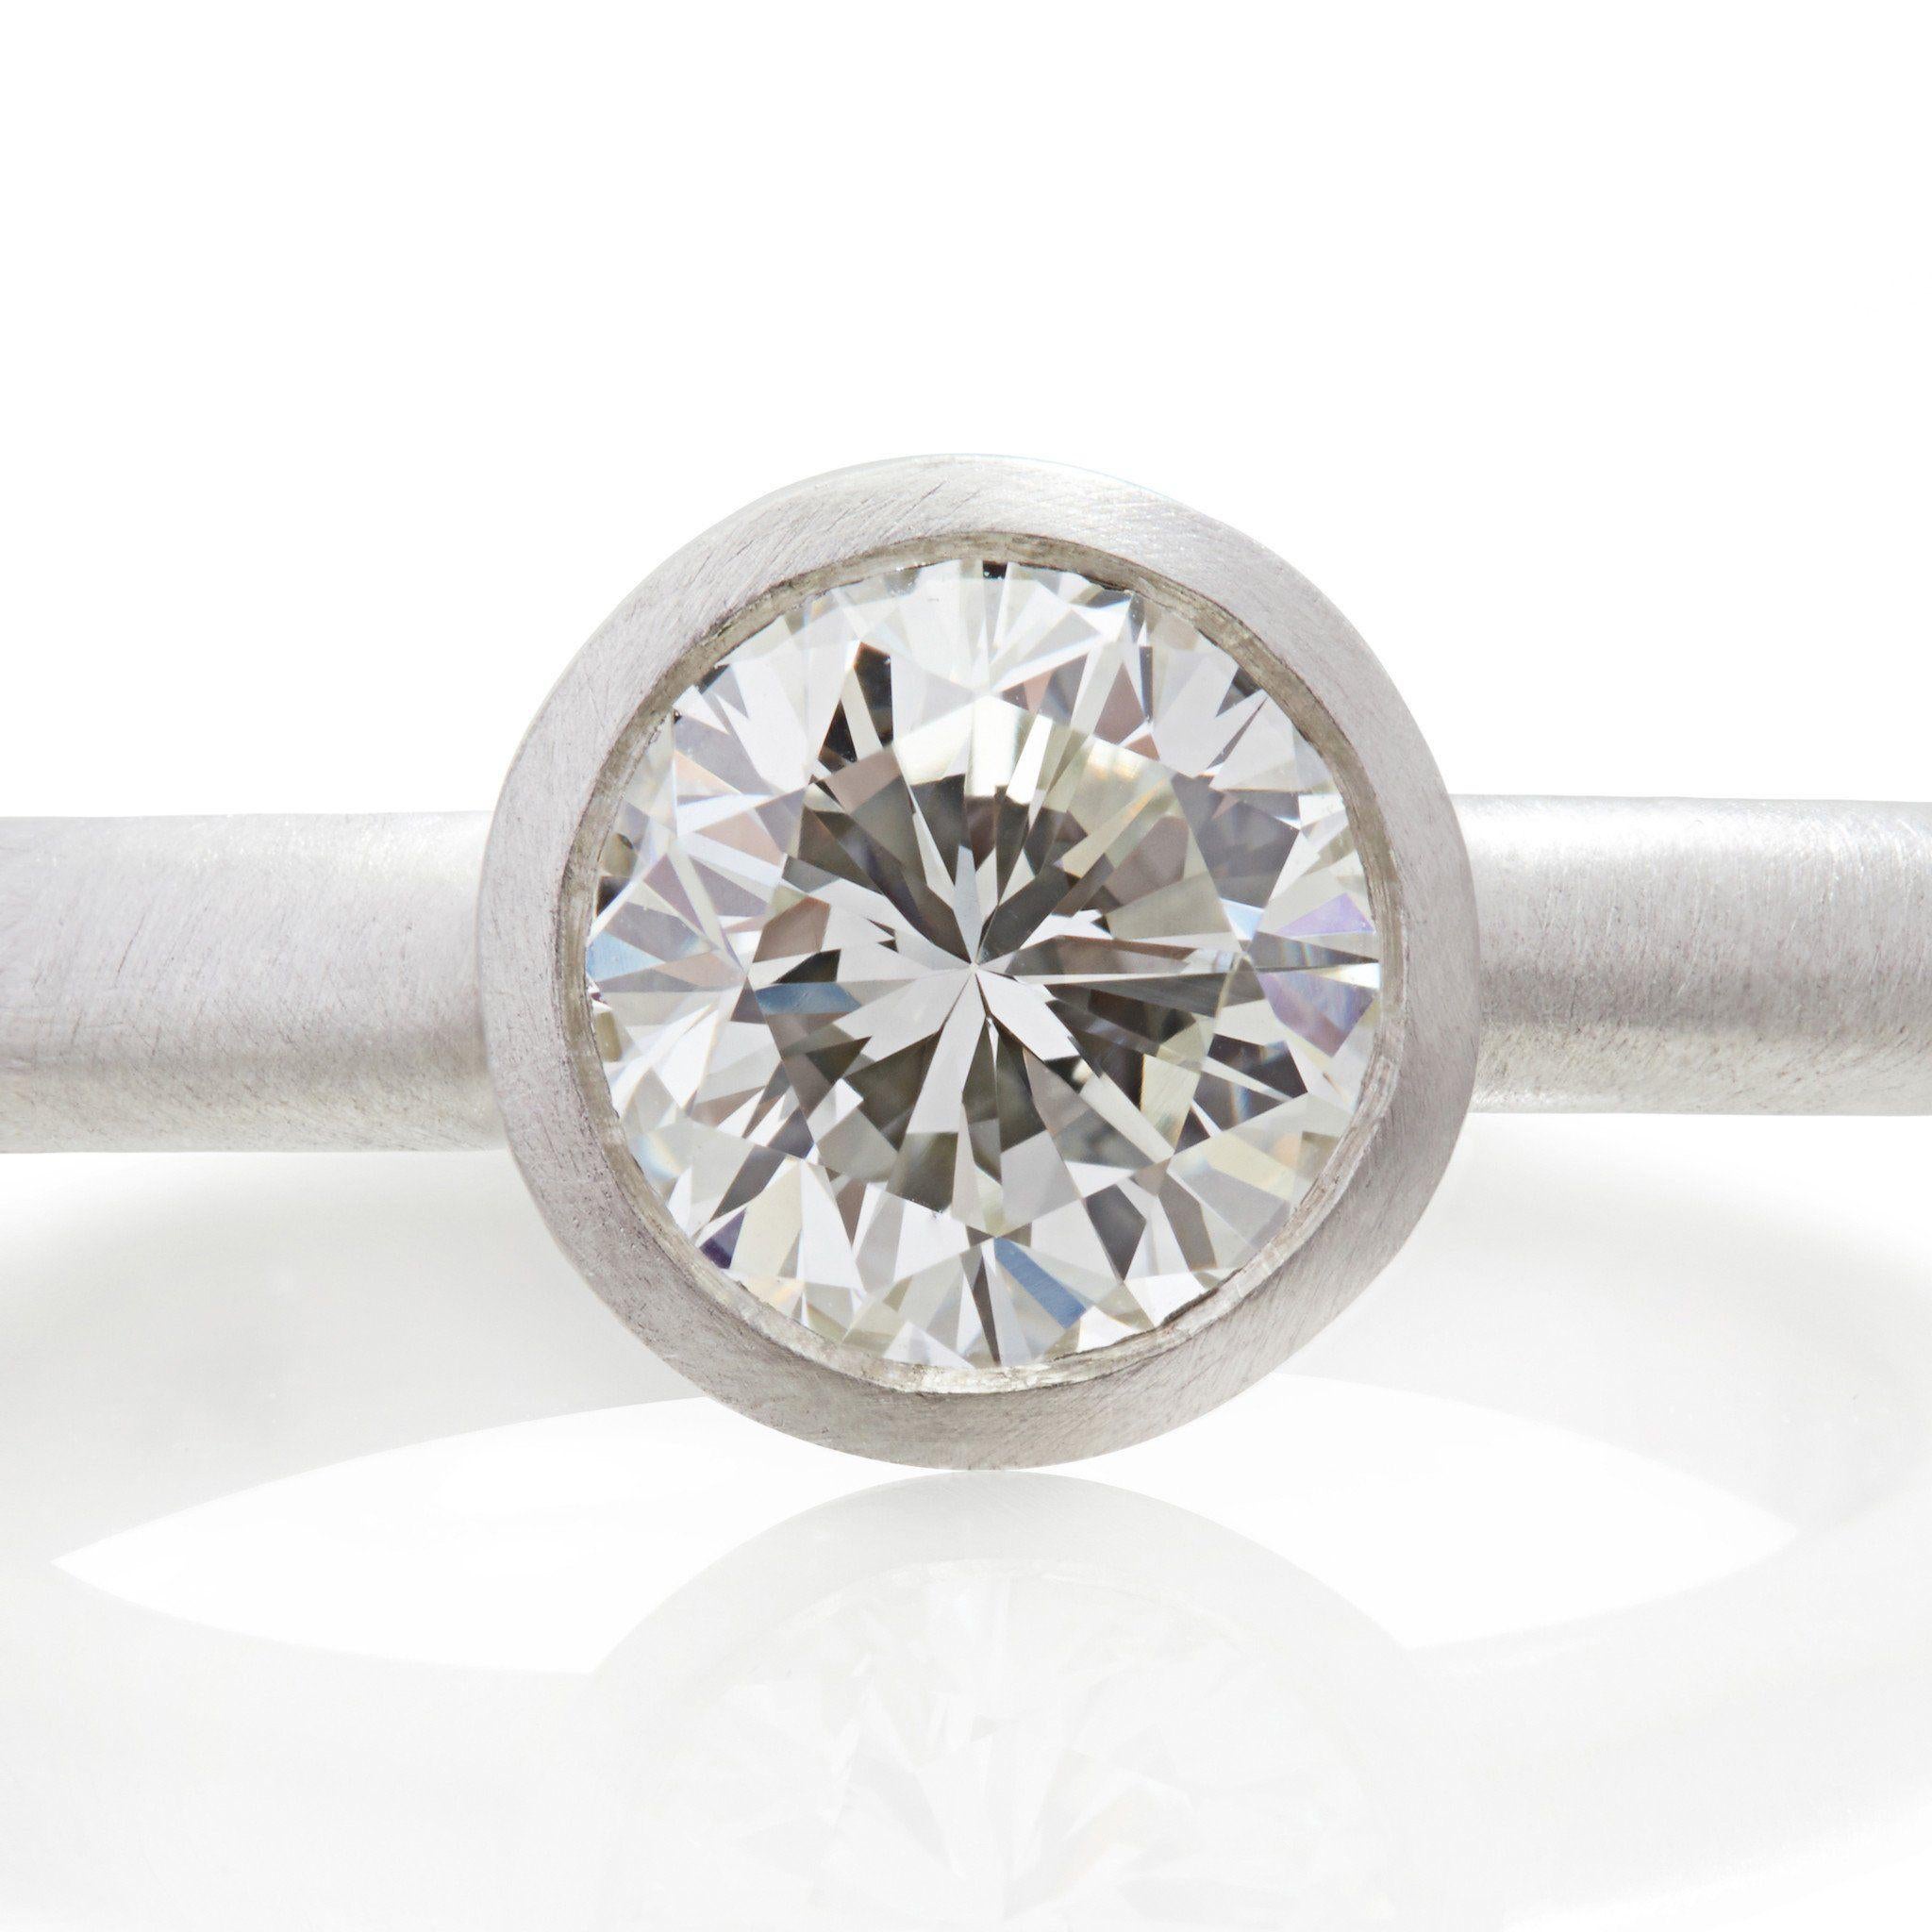 Round Cut GIA Certified 1.17 Carat Diamond Engagement Ring in Platinum